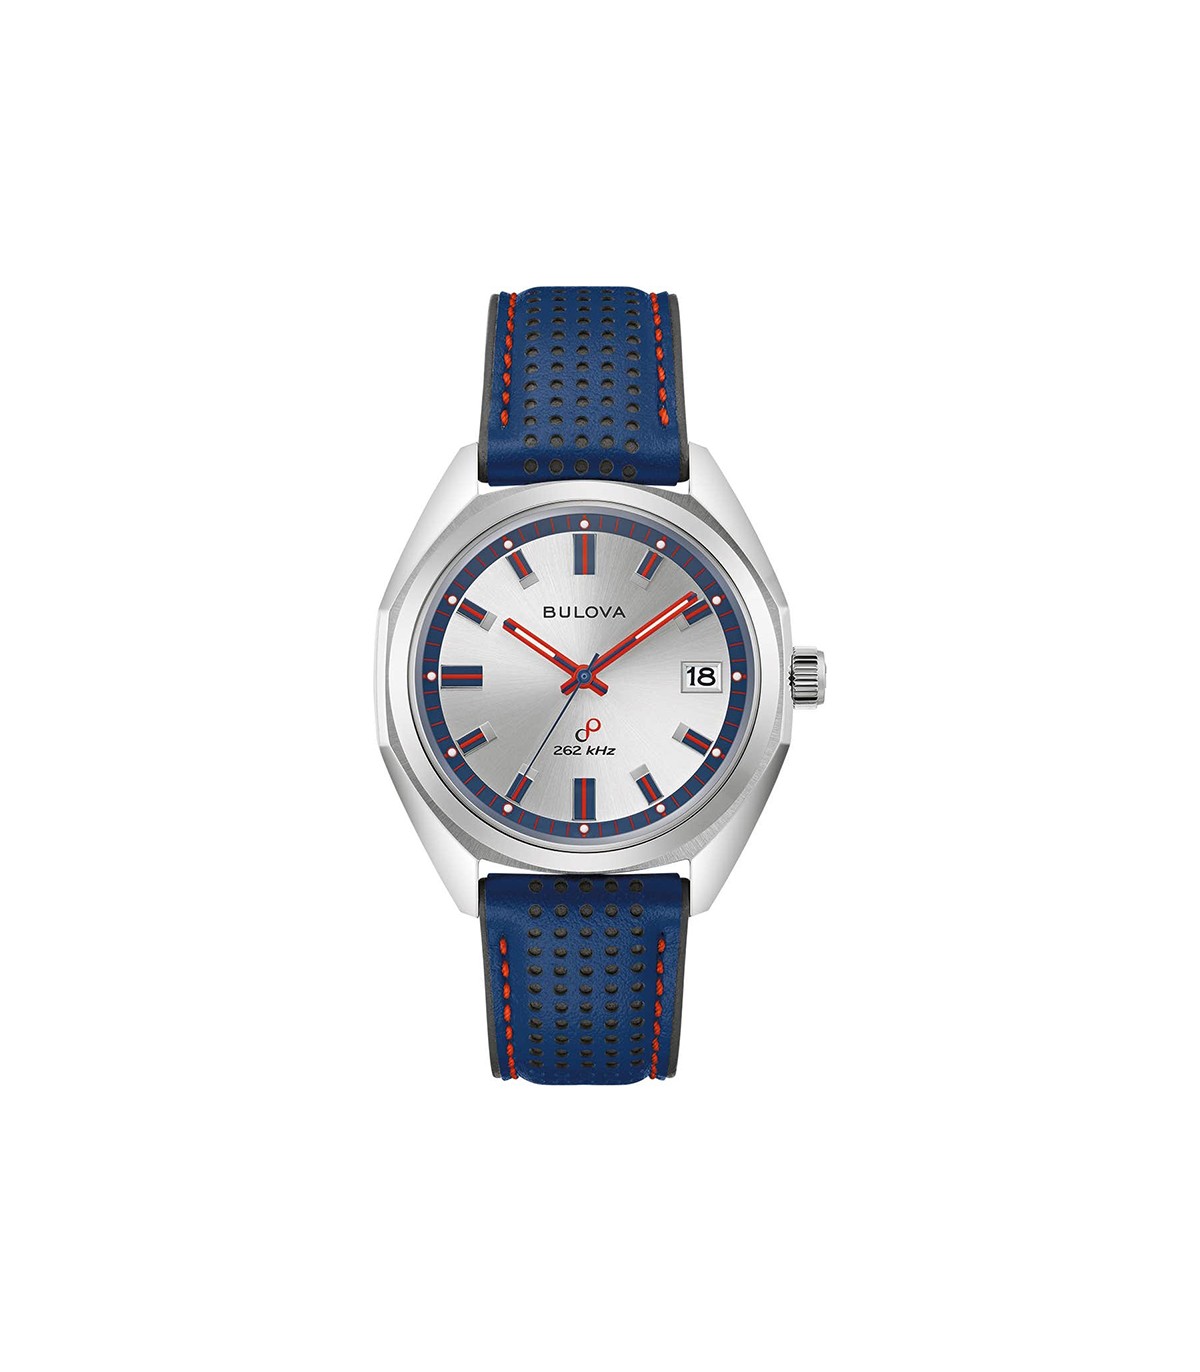 Bulova watch - Jet Star Limited Edition Precisionist 40mm Silver